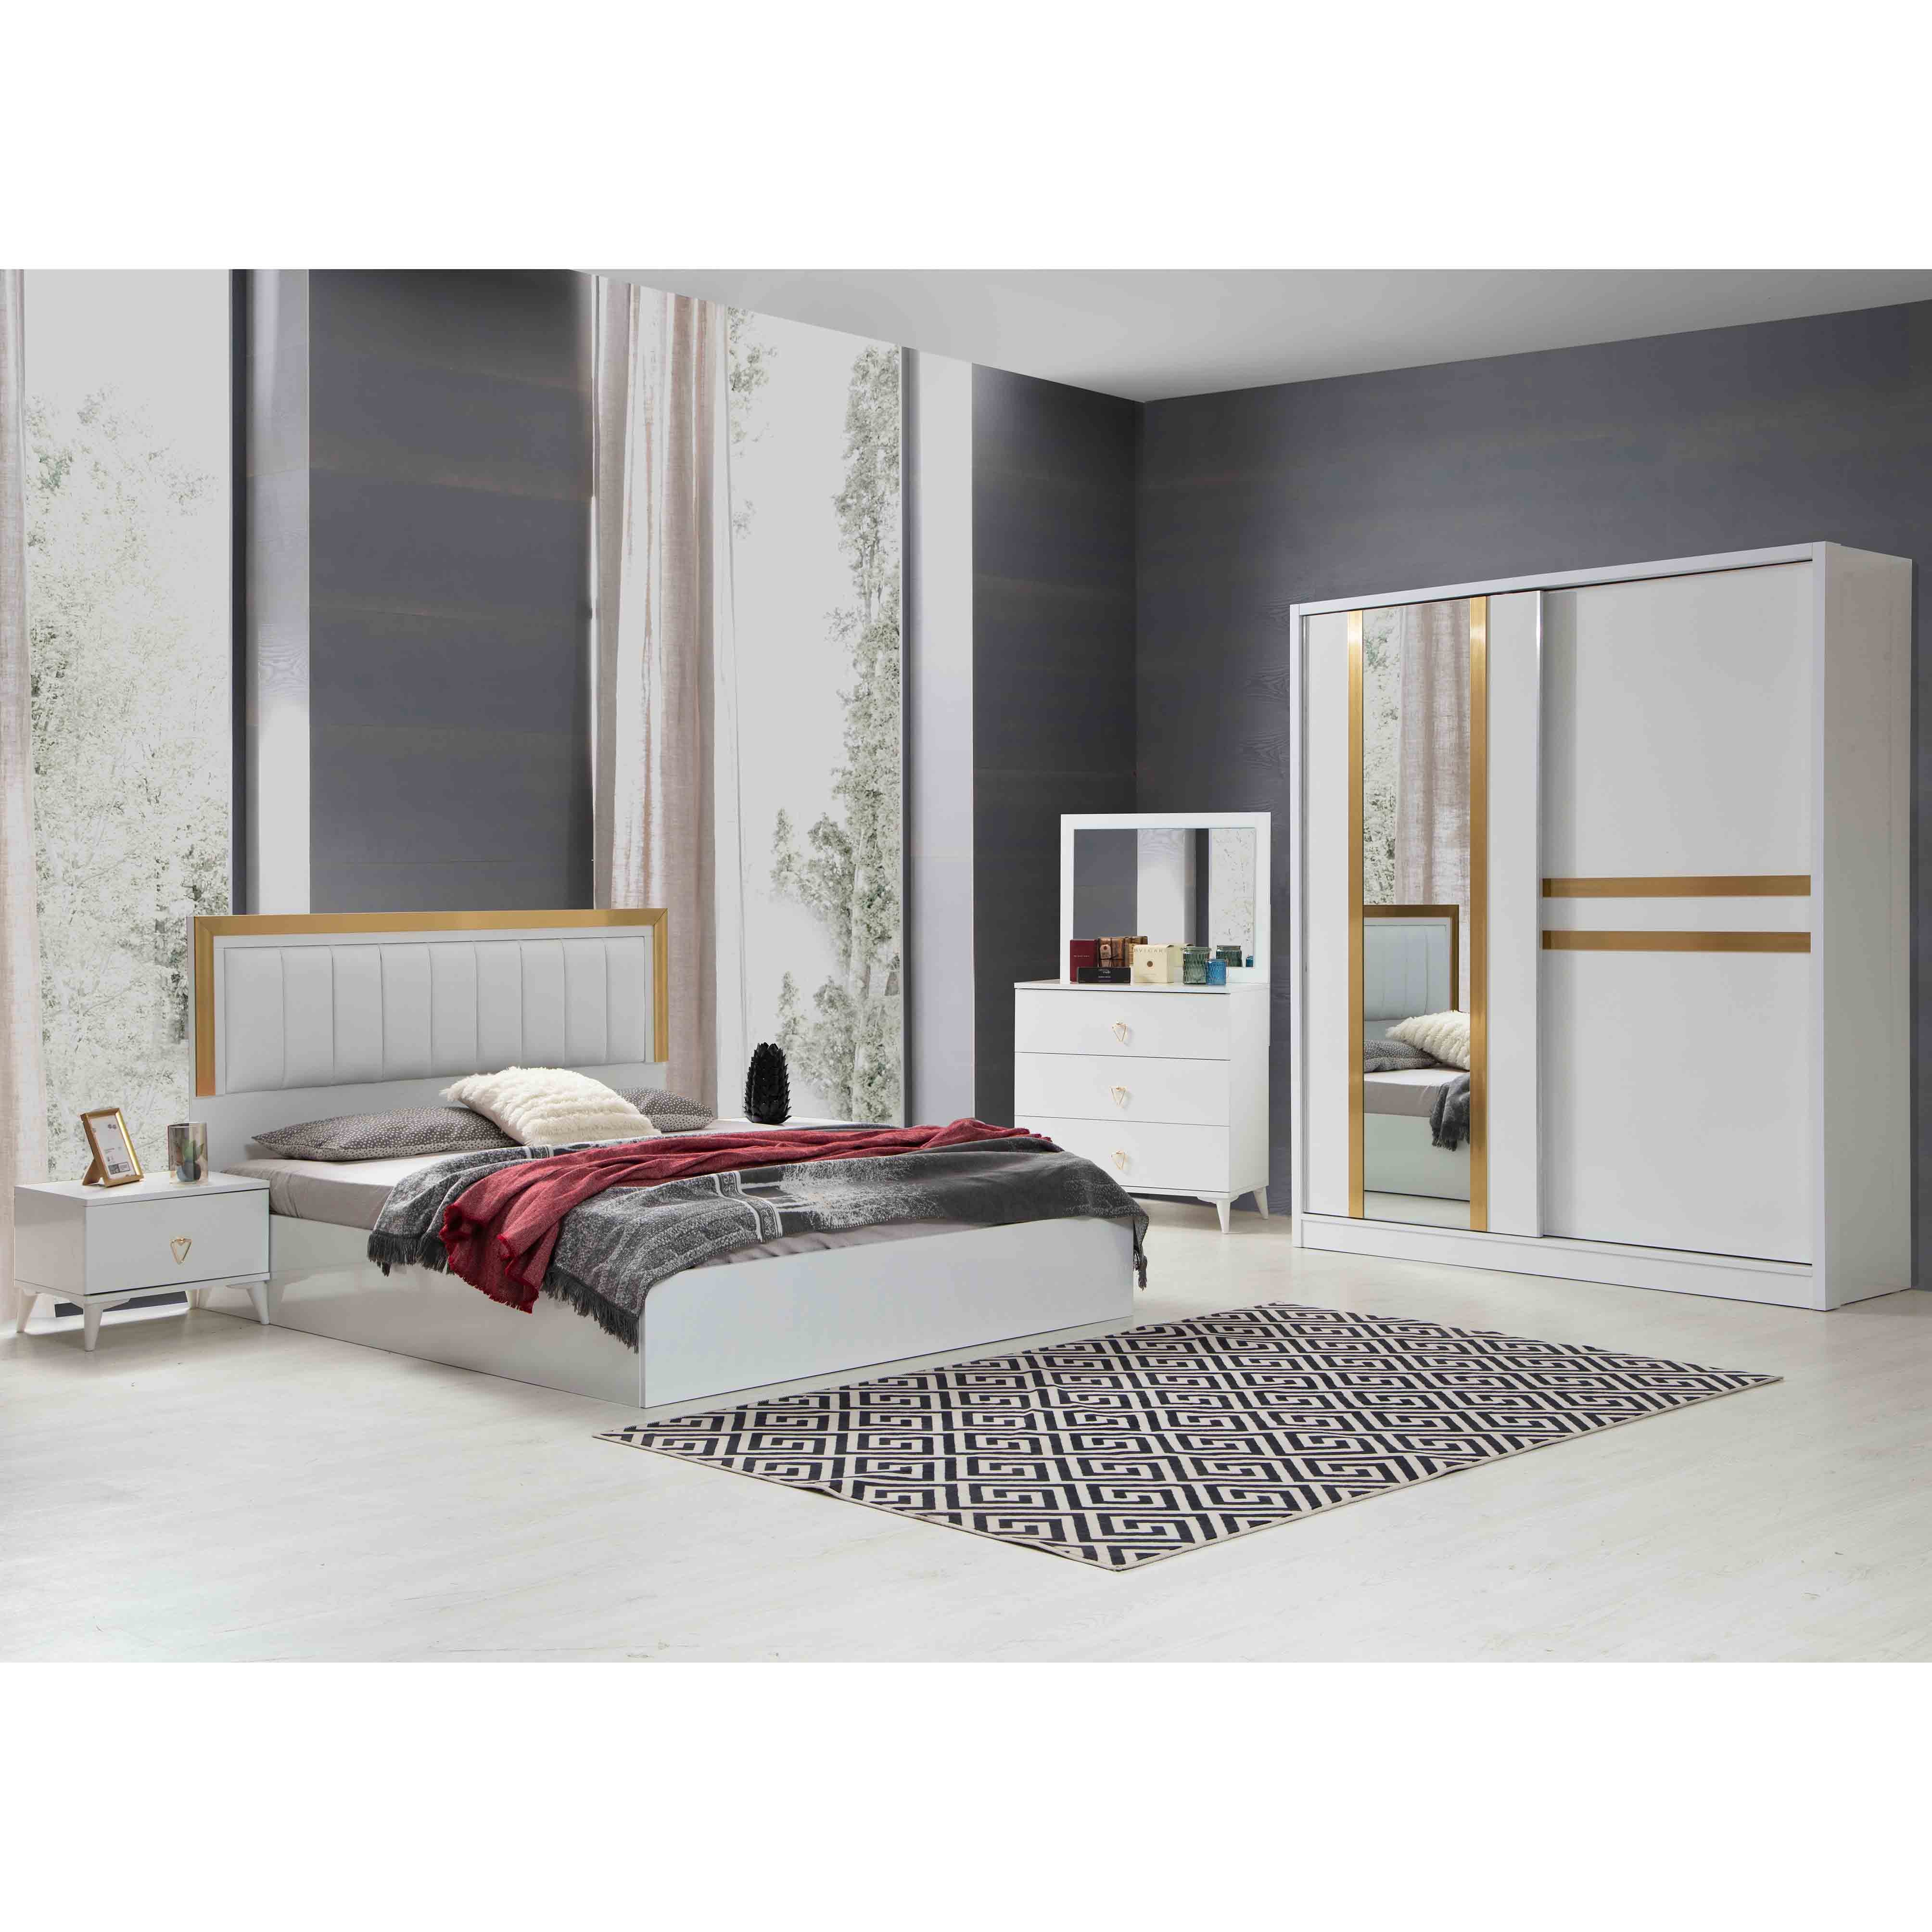 Rüya Vol1 Bedroom With 180 cm Wardrobe